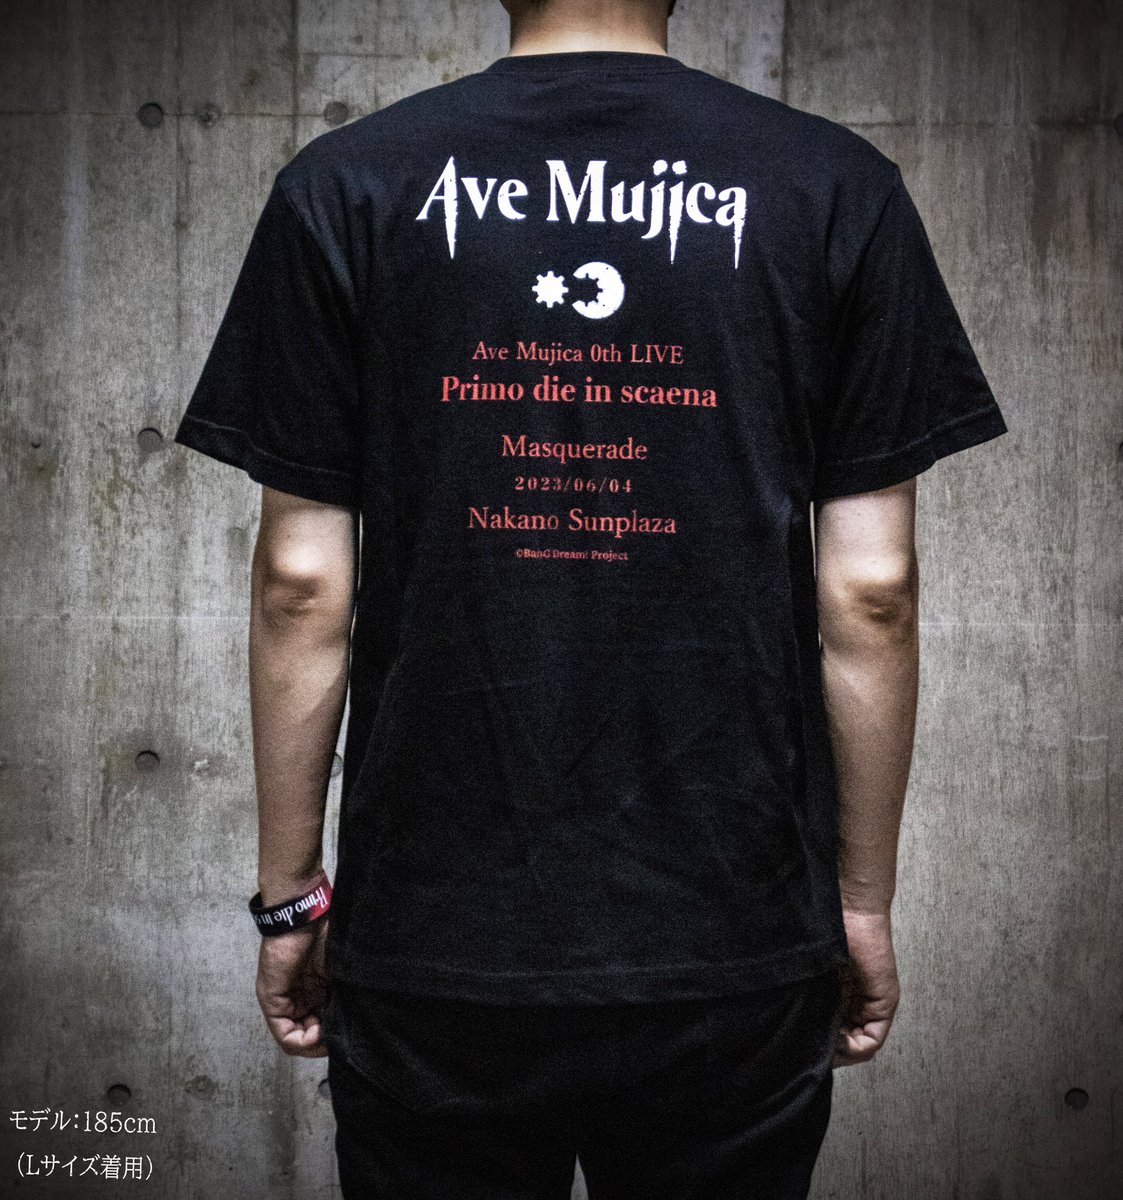 Tシャツ(L) BanG Dream! Ave Mujica 0th LIVE